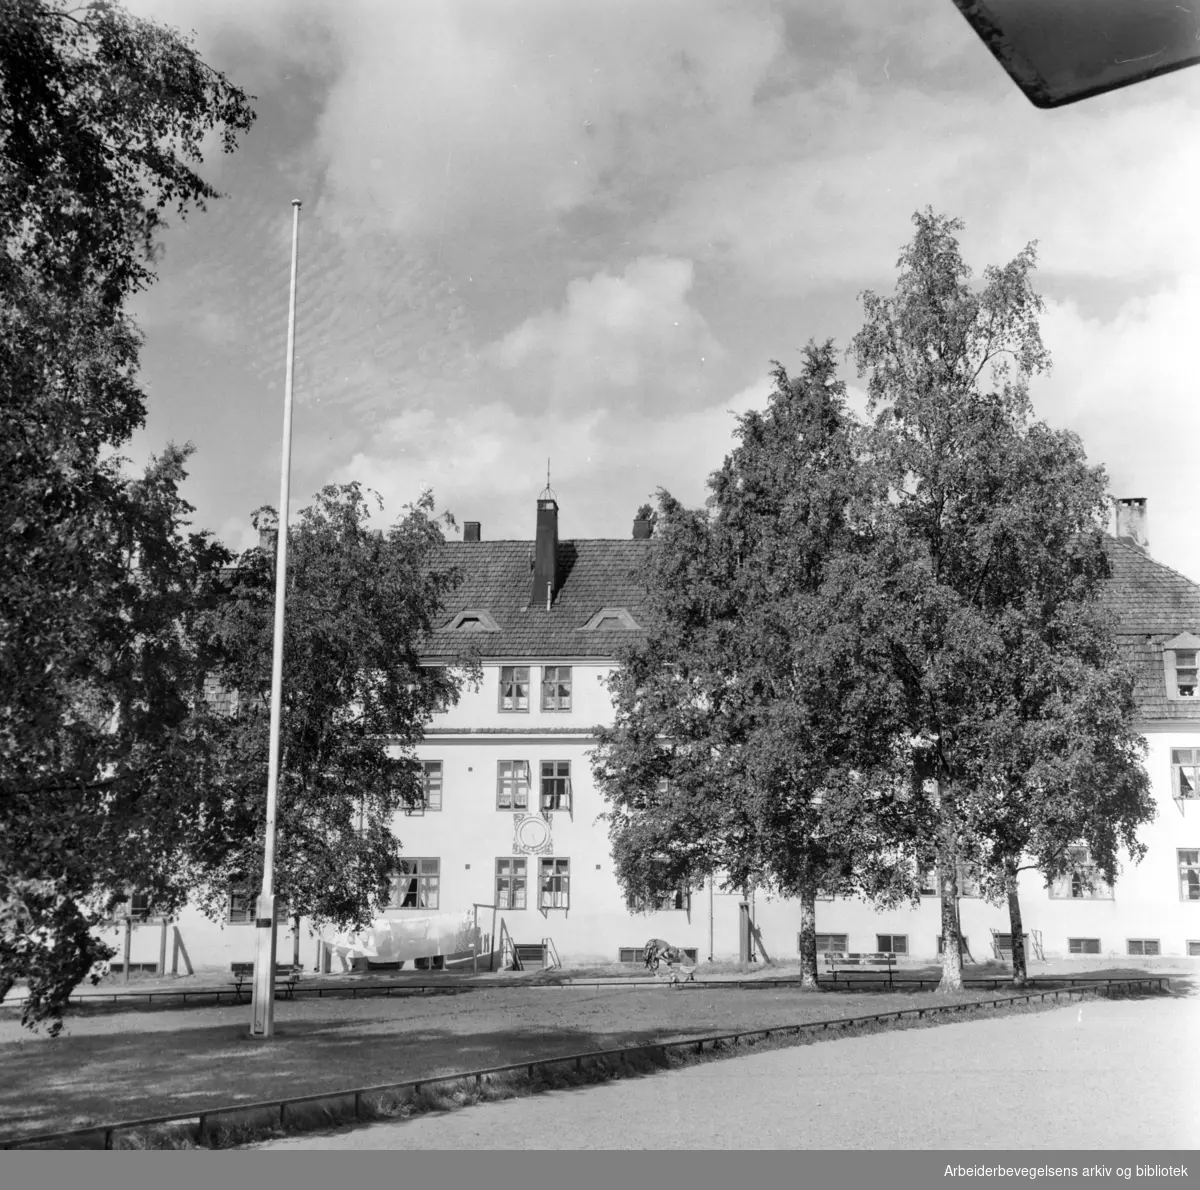 Lindern hageby. August 1959